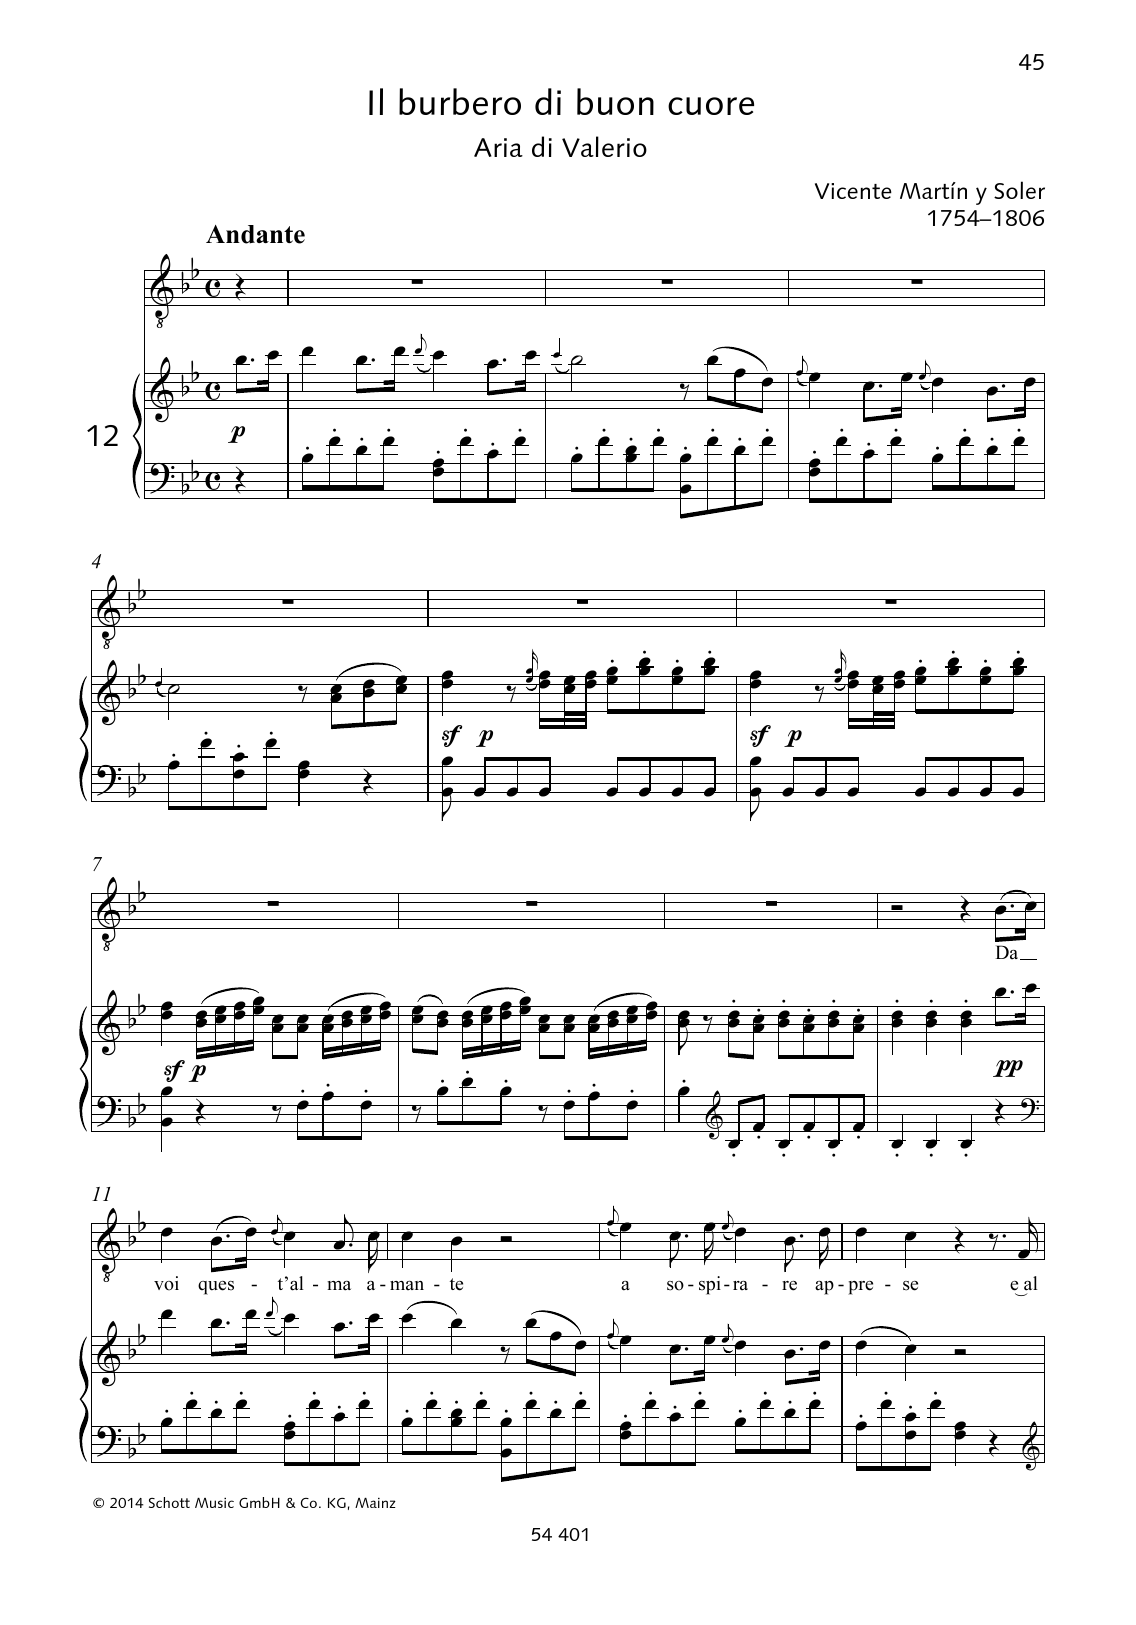 Vincente Martin Y Soler Da voi quest'alma amante sheet music notes and chords arranged for Piano & Vocal